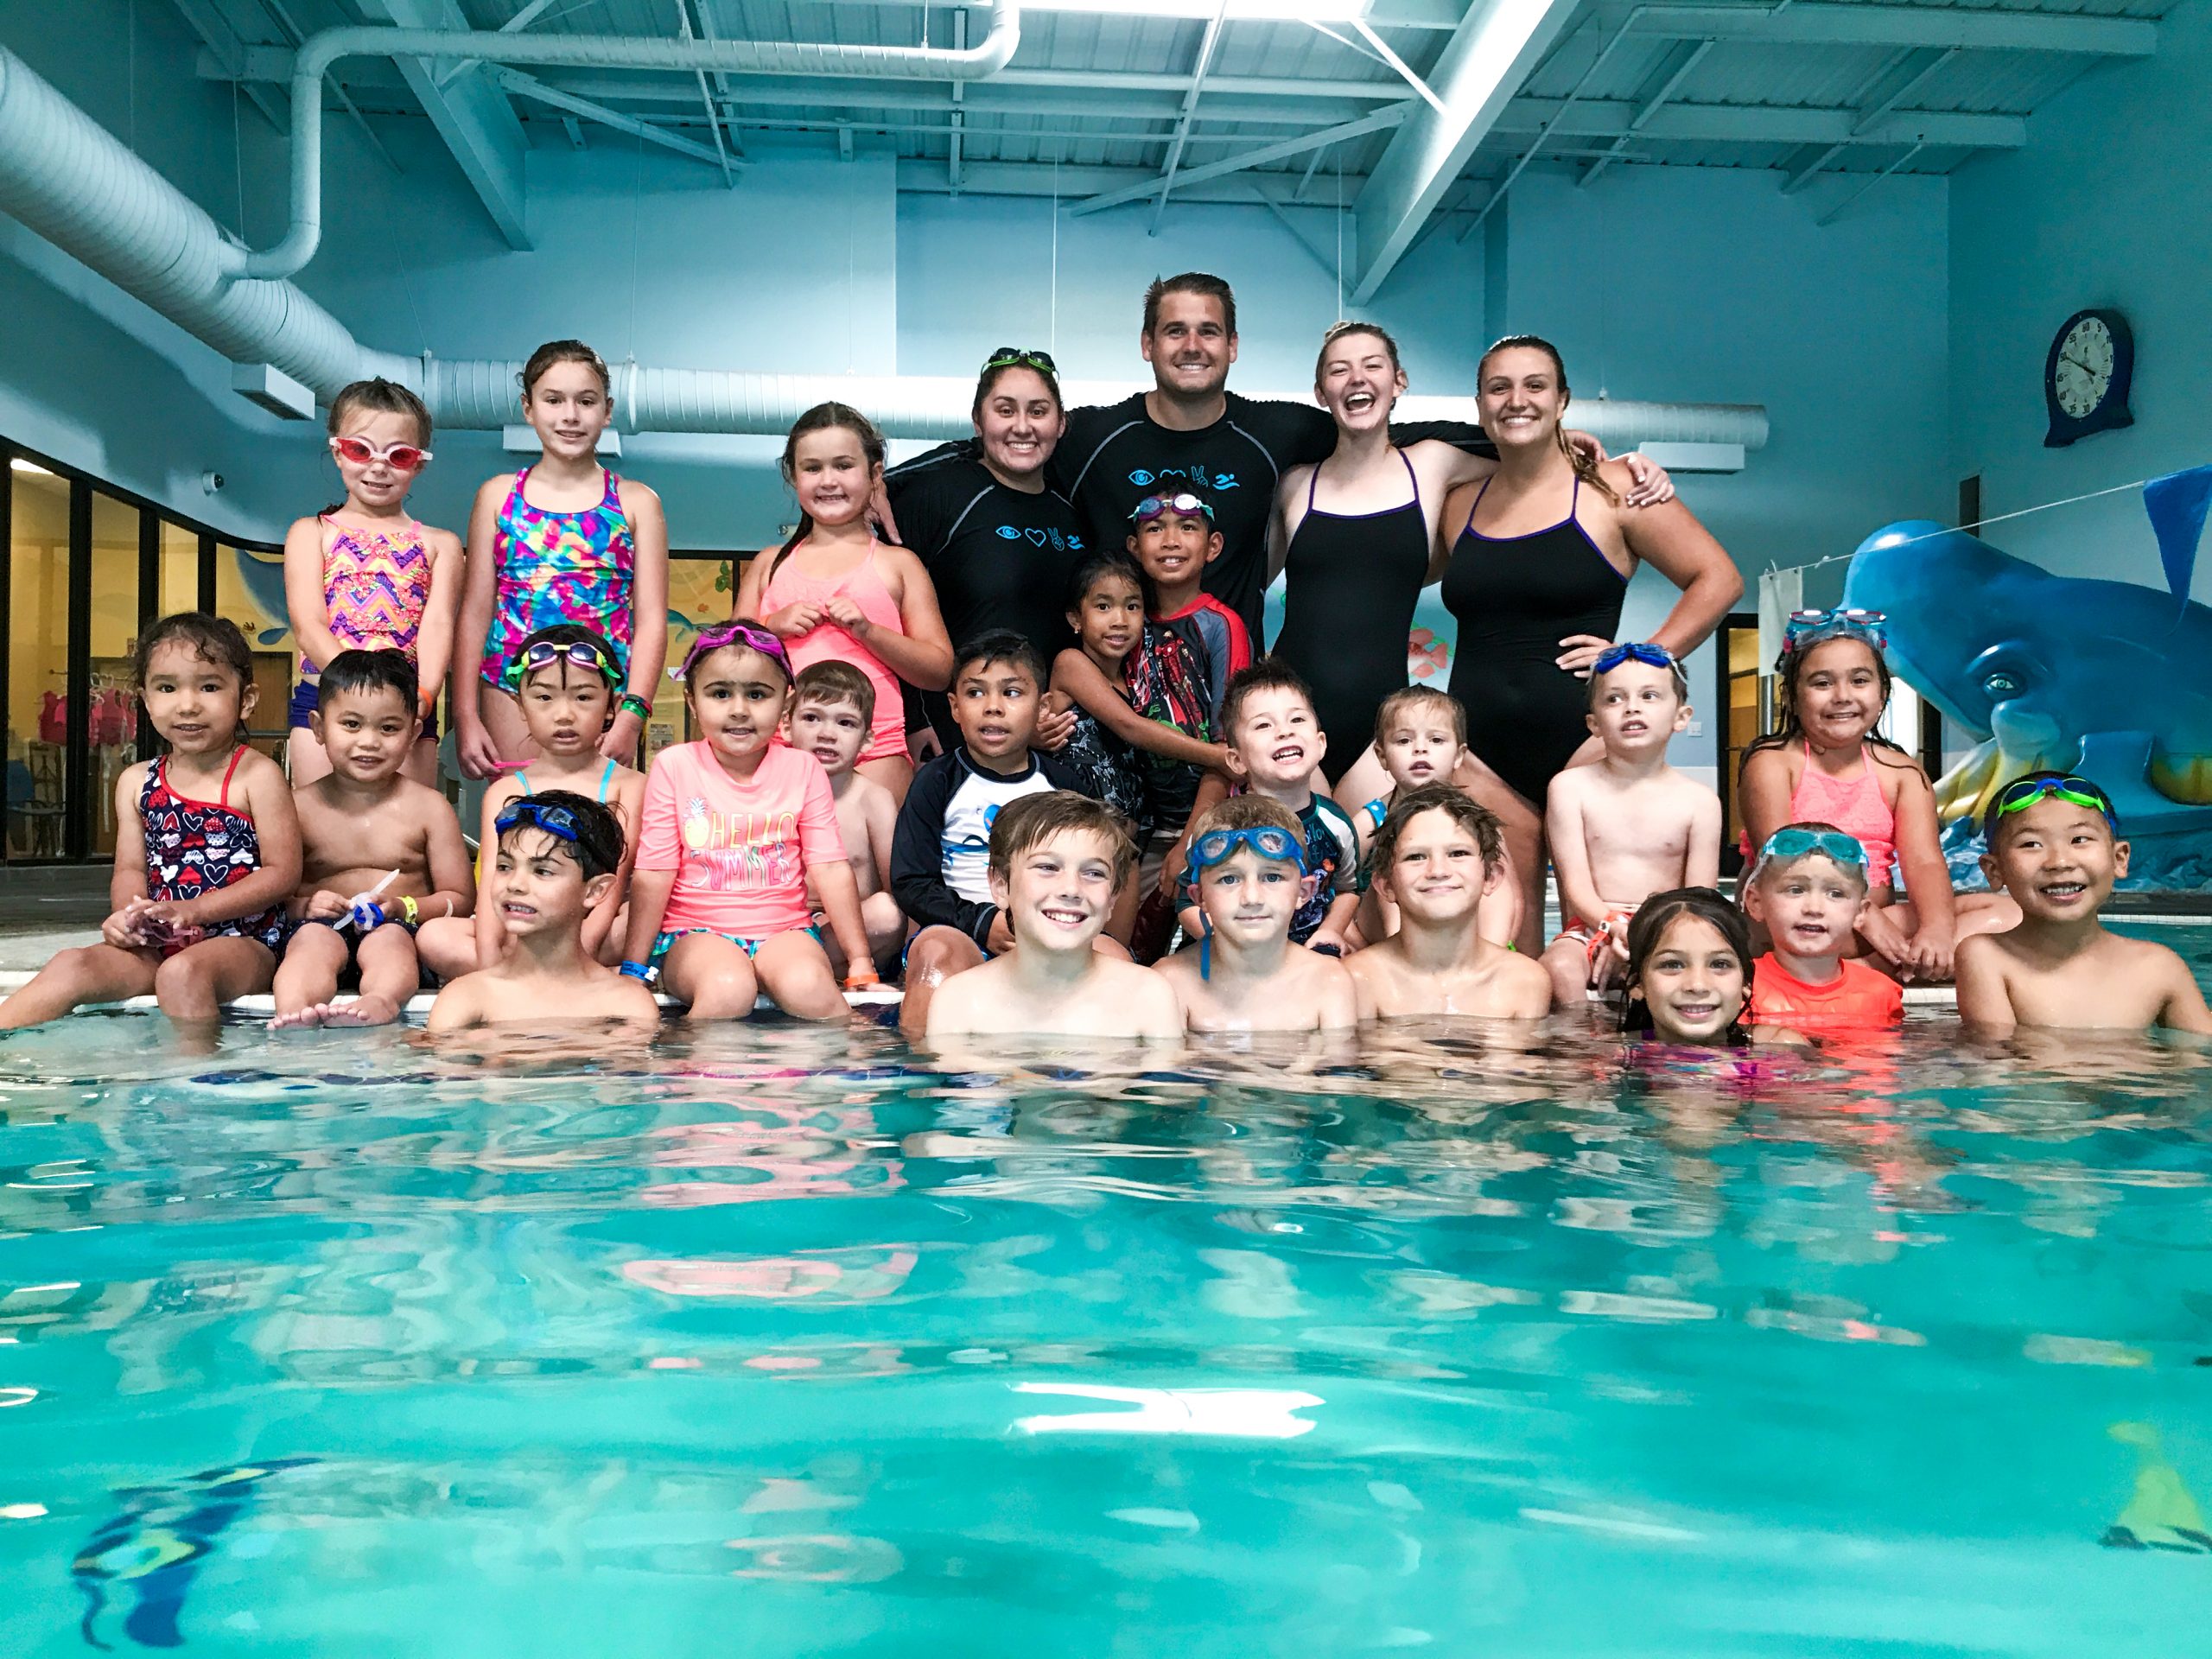 America's Kids Swim School Coaches loves their job, teaching children to swim